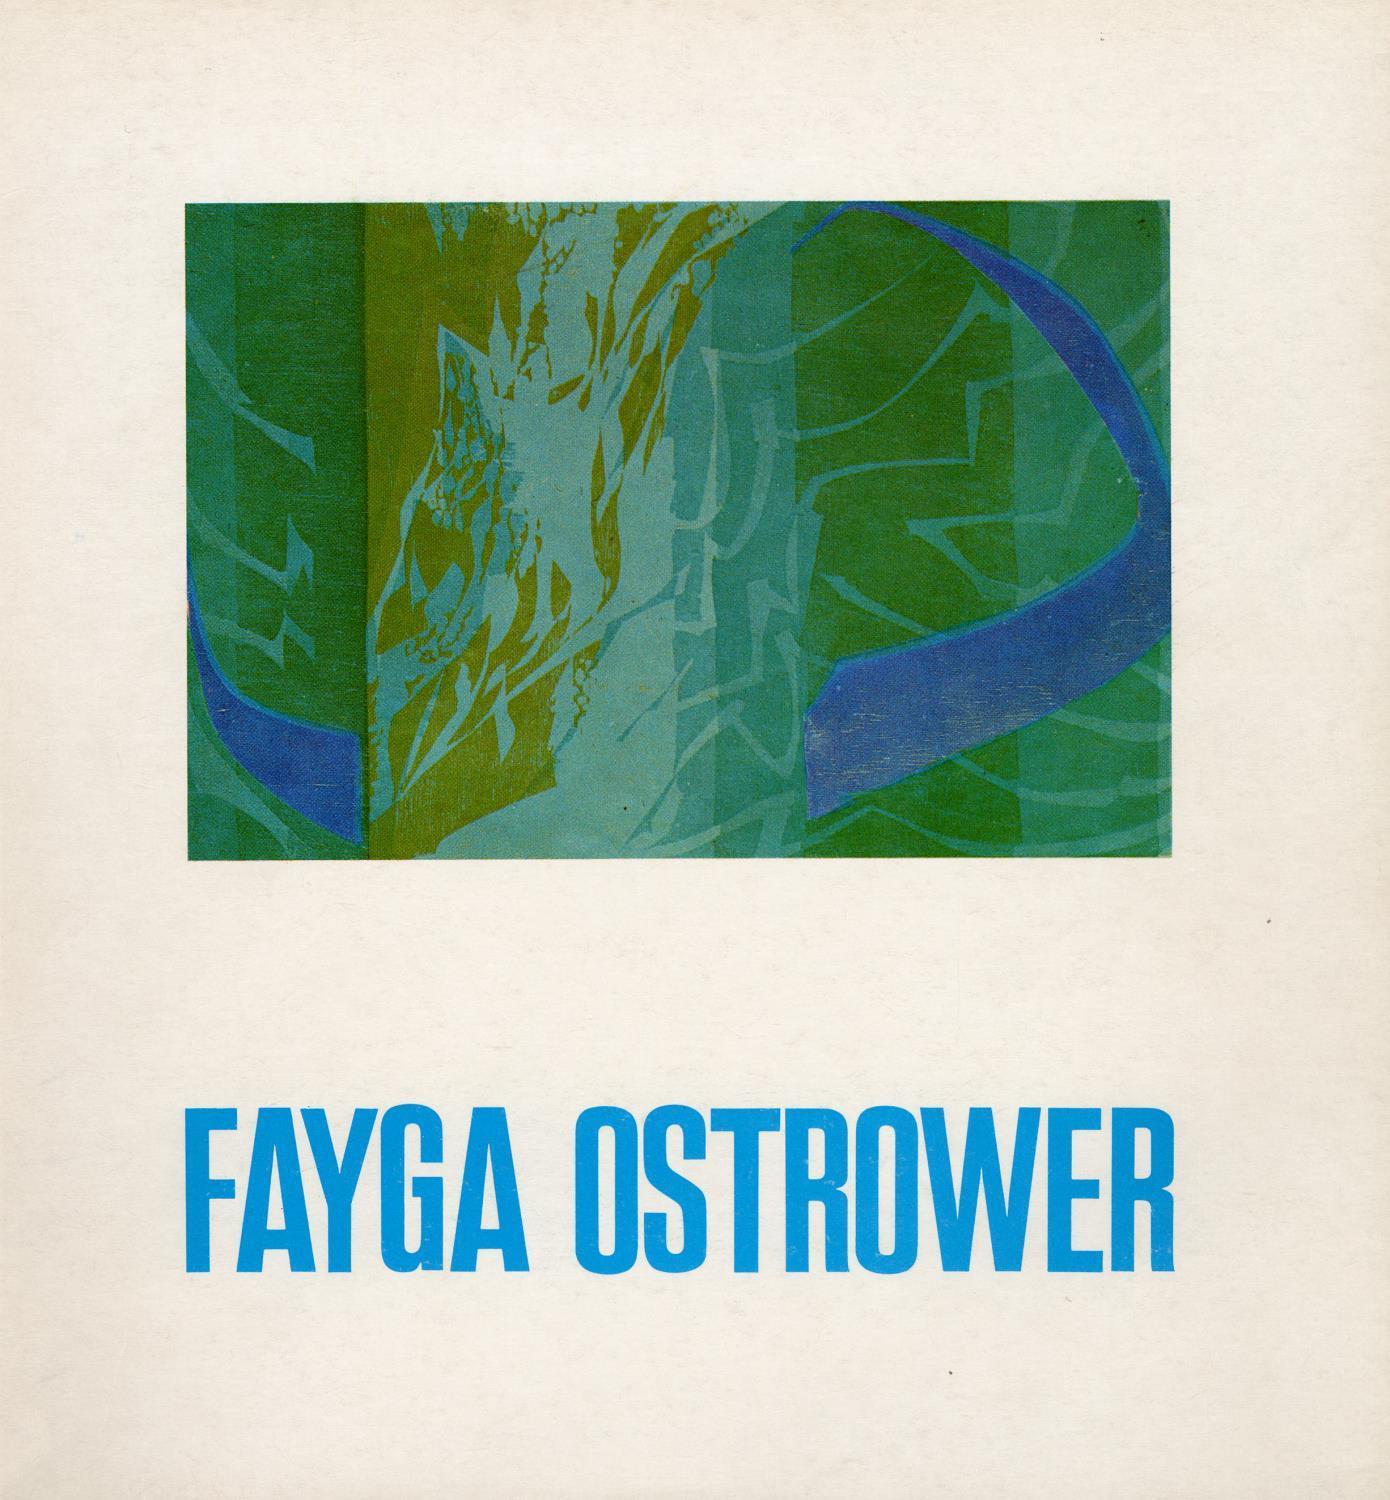 Fayga Ostrower